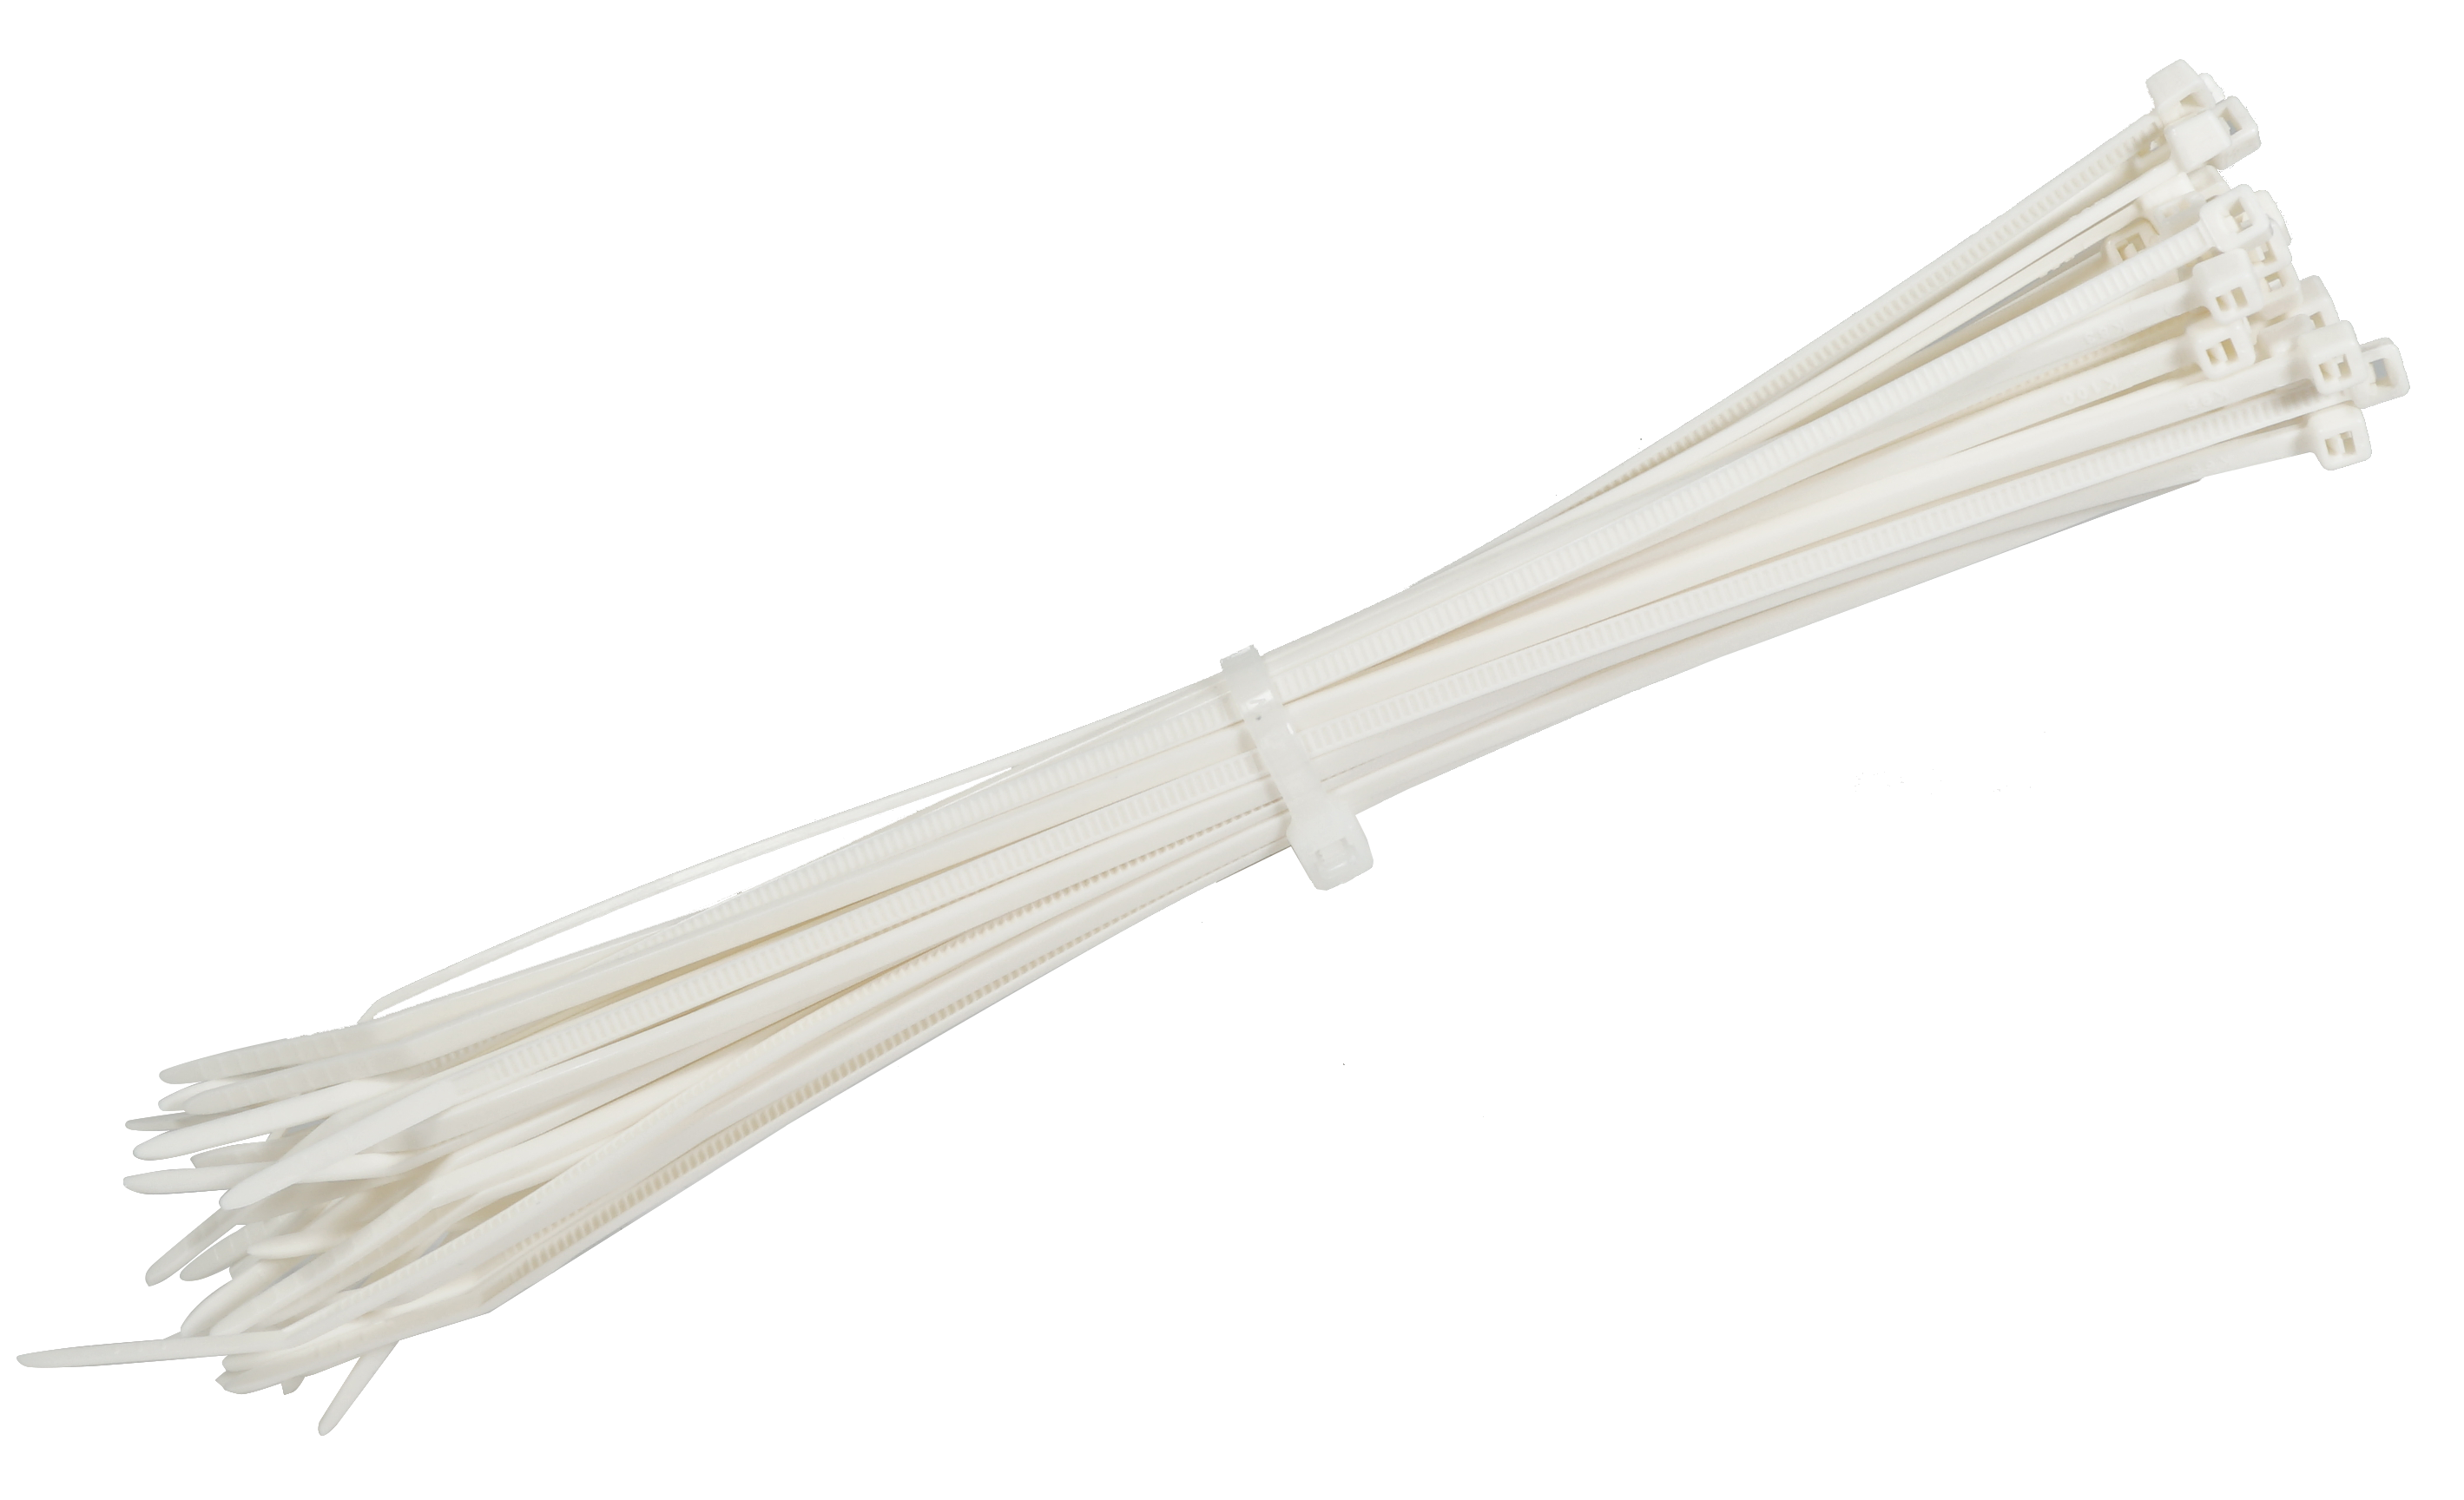 Flame Retardant V0 Cable Tie